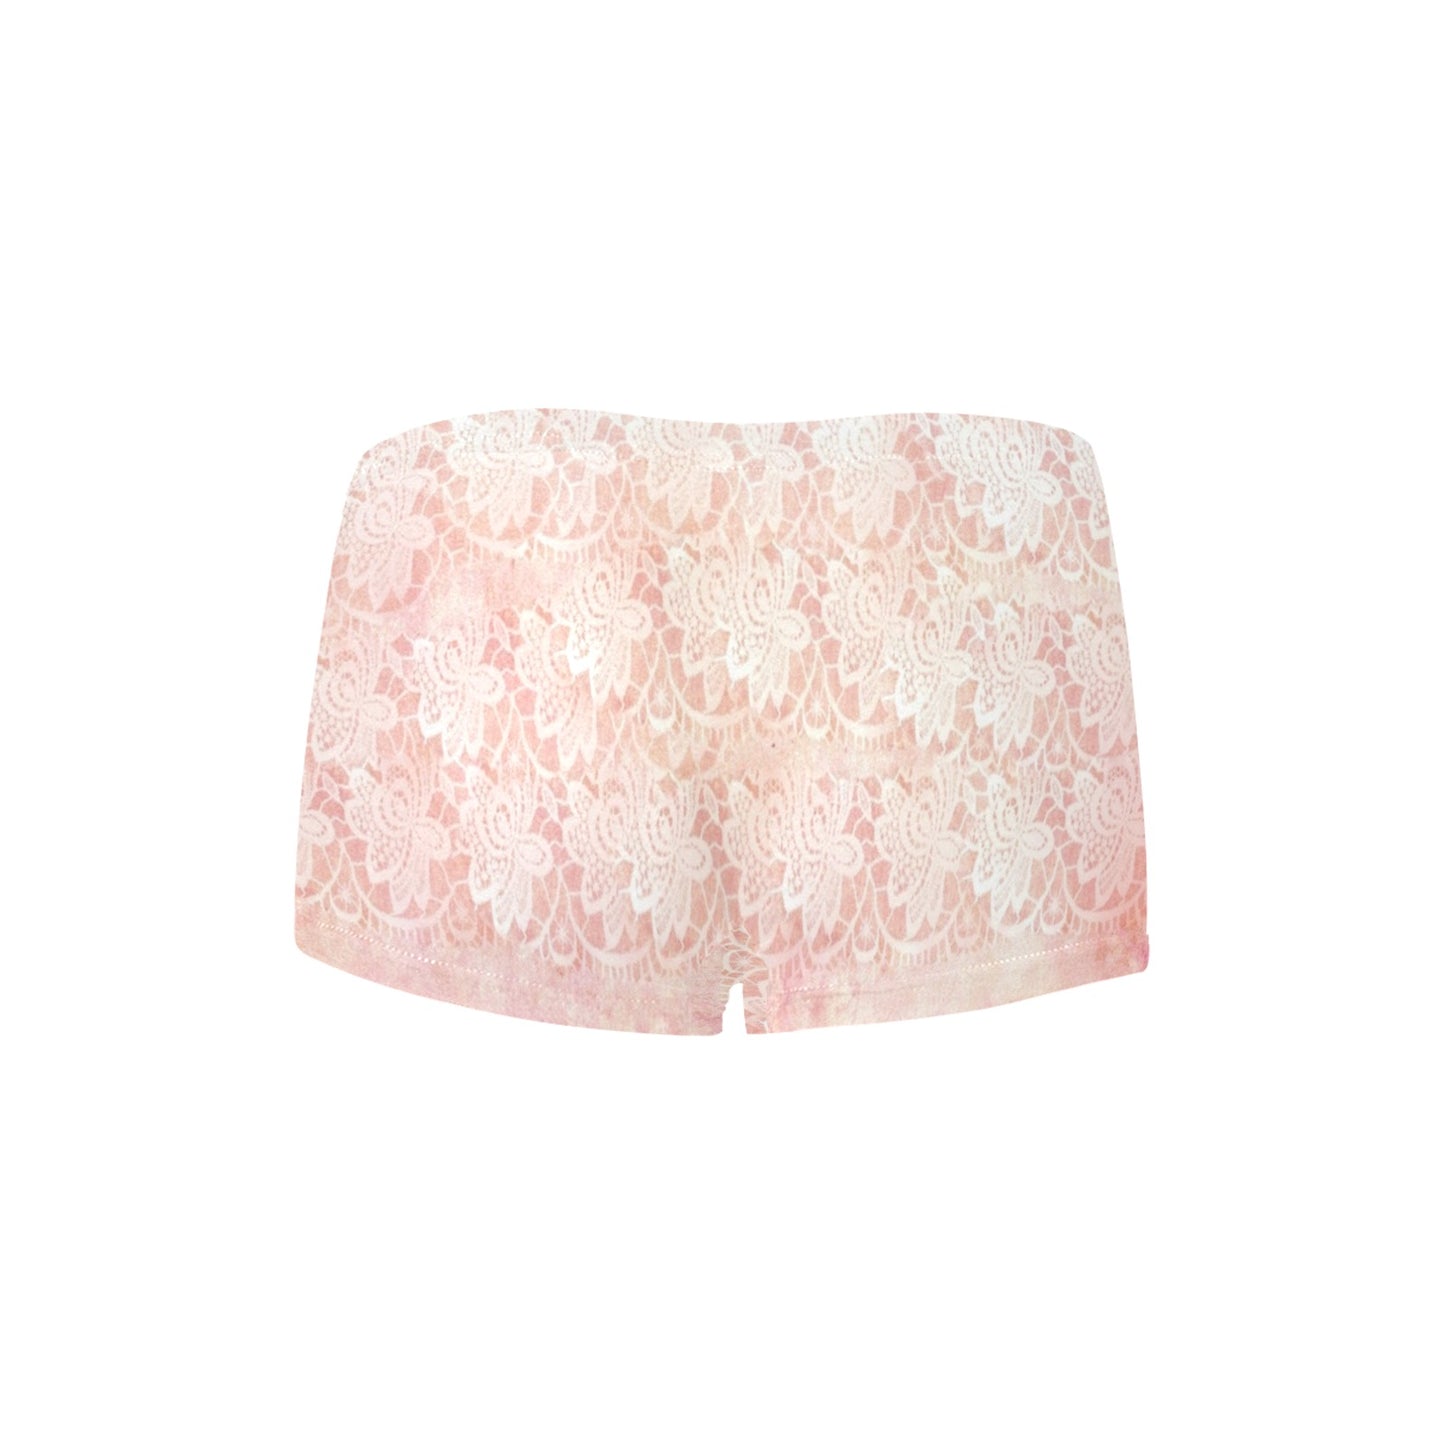 Printed Lace Boyshorts, daisy dukes, pum pum shorts, shortie shorts , design 38